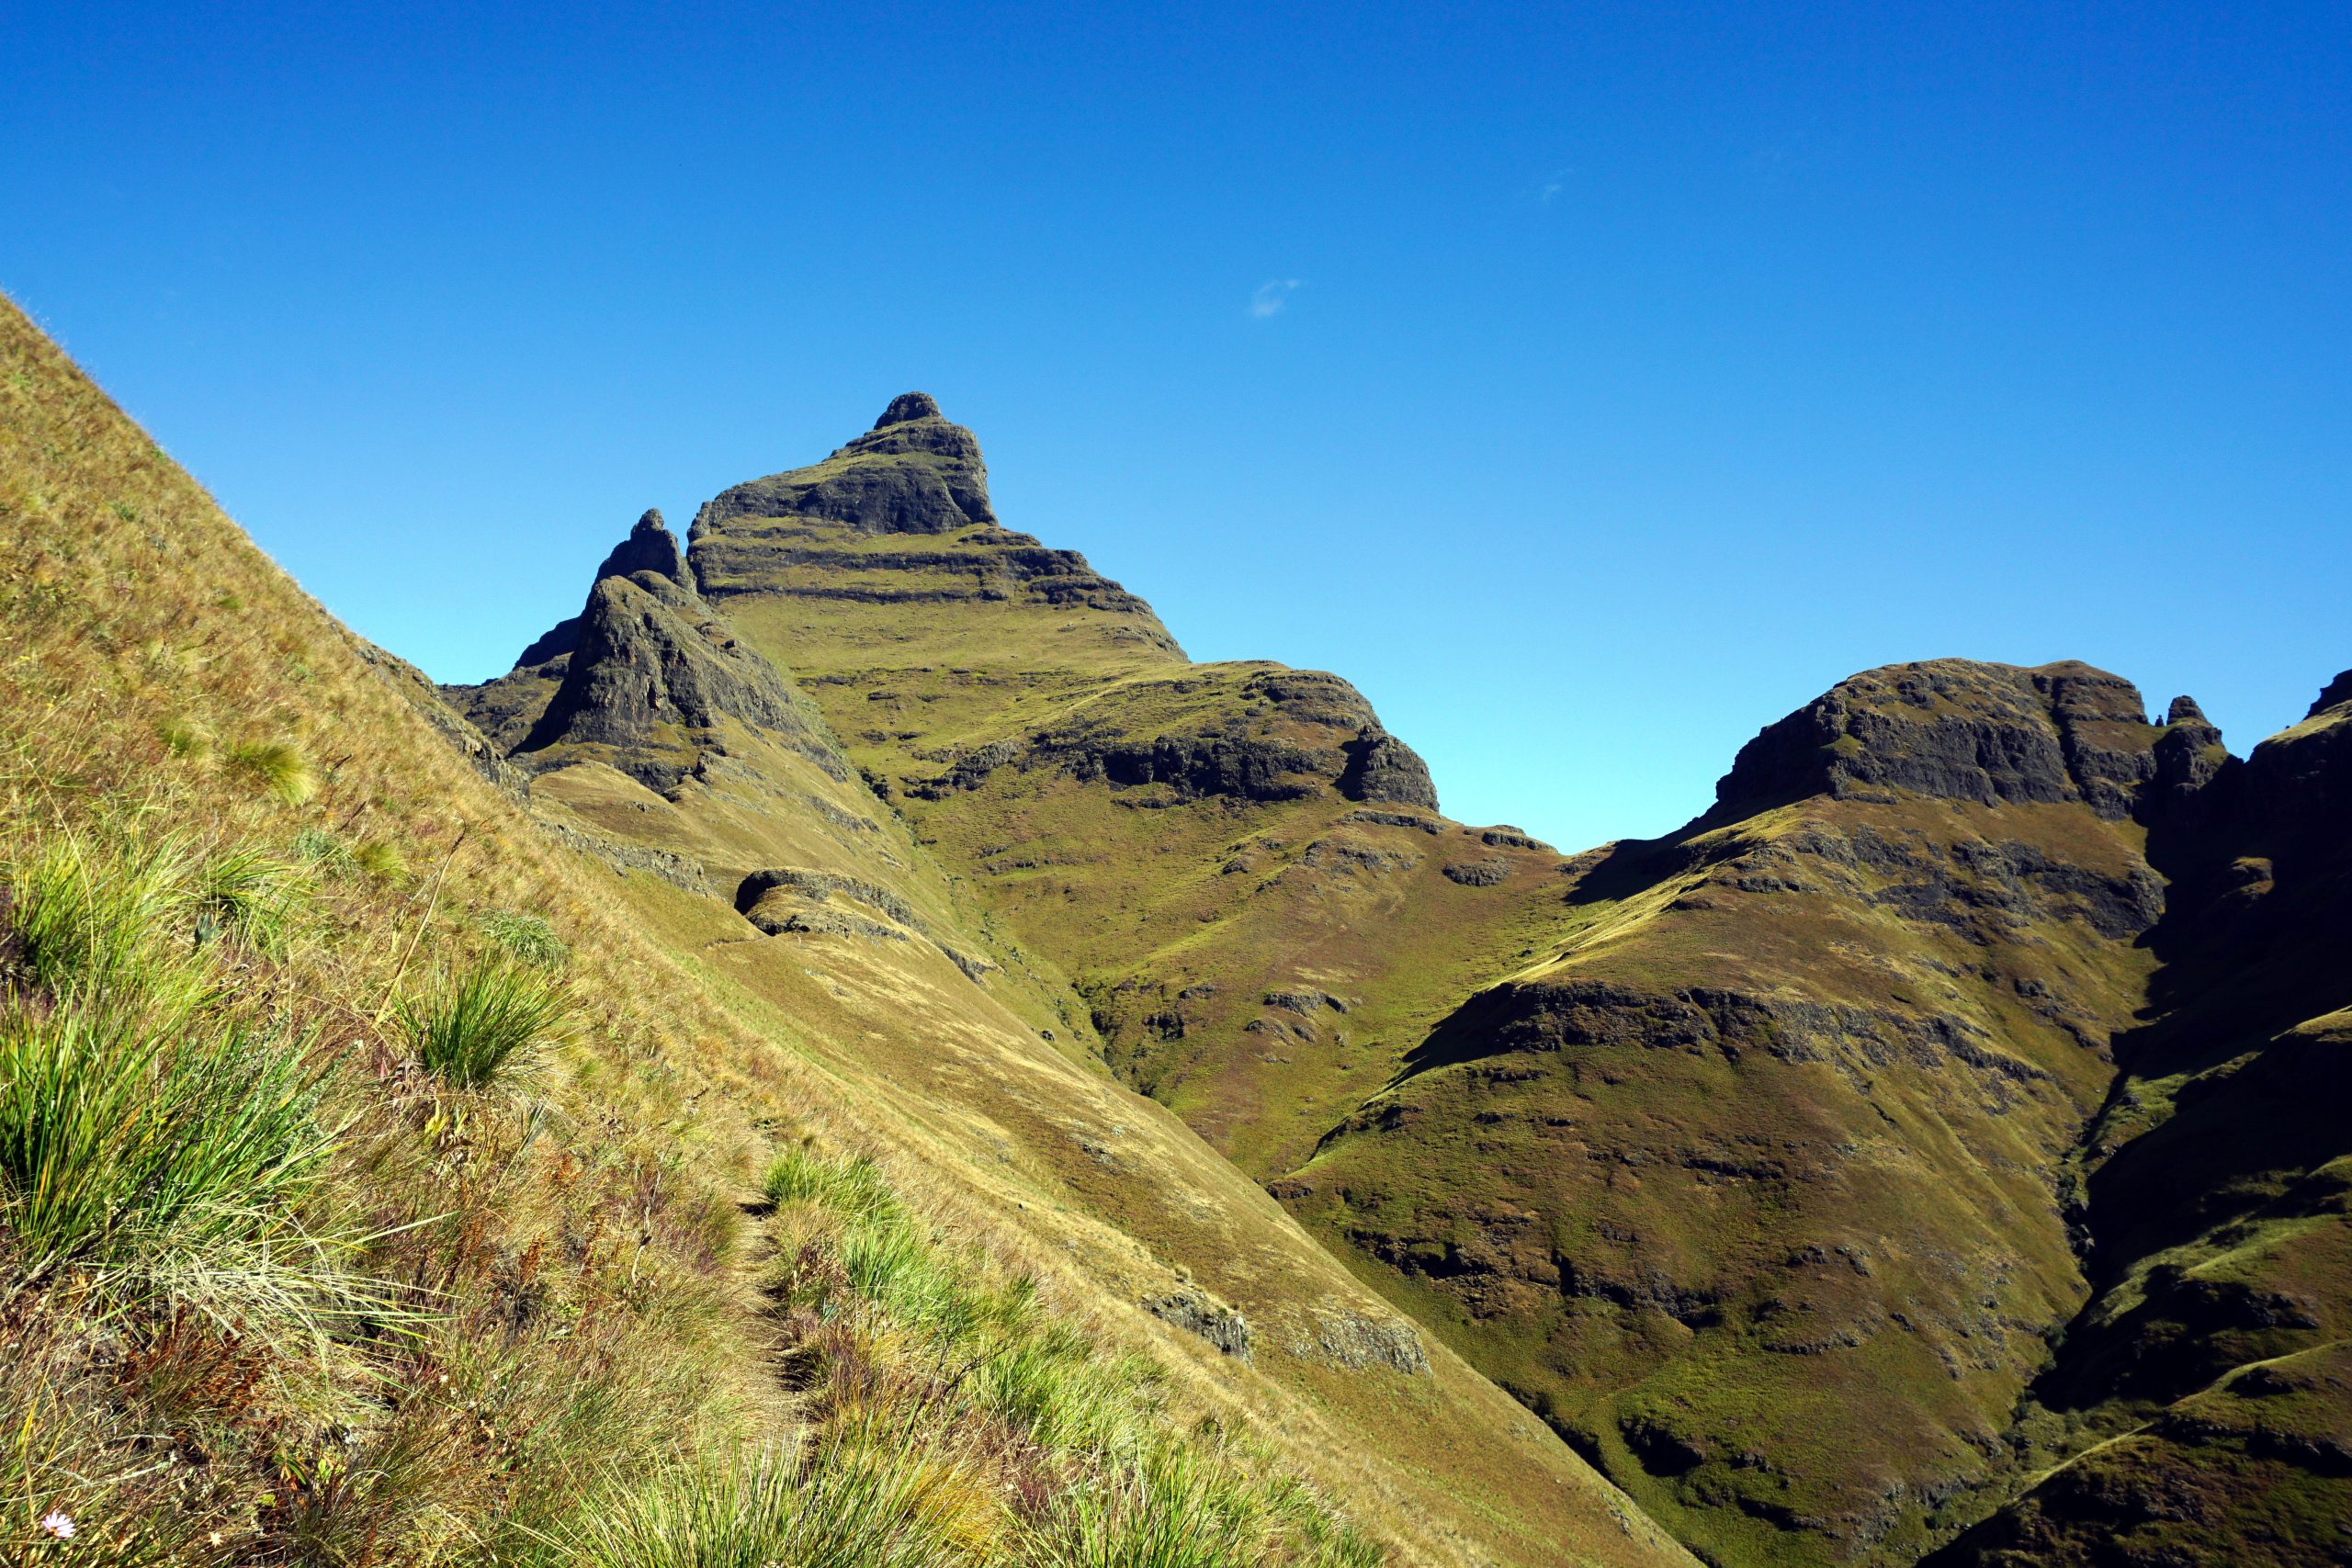 Escursione ad alta quota nelle Drakensberg: Cathedral Peak